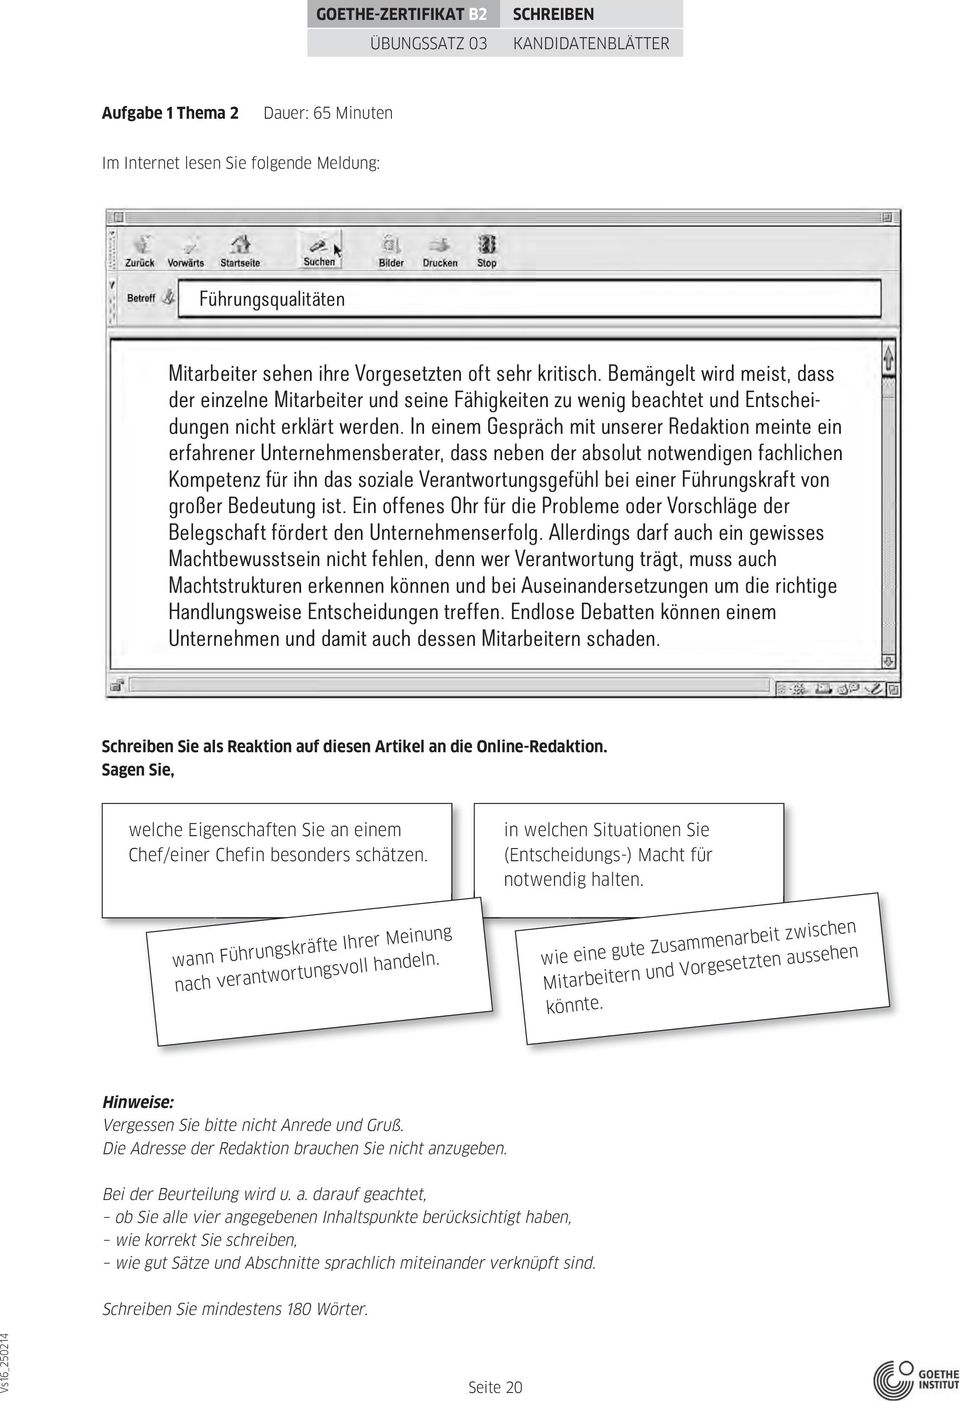 Goethe Zertifikat B2 Ubungssatz 03 Kandidatenblatter Pruferblatter Pdf Kostenfreier Download